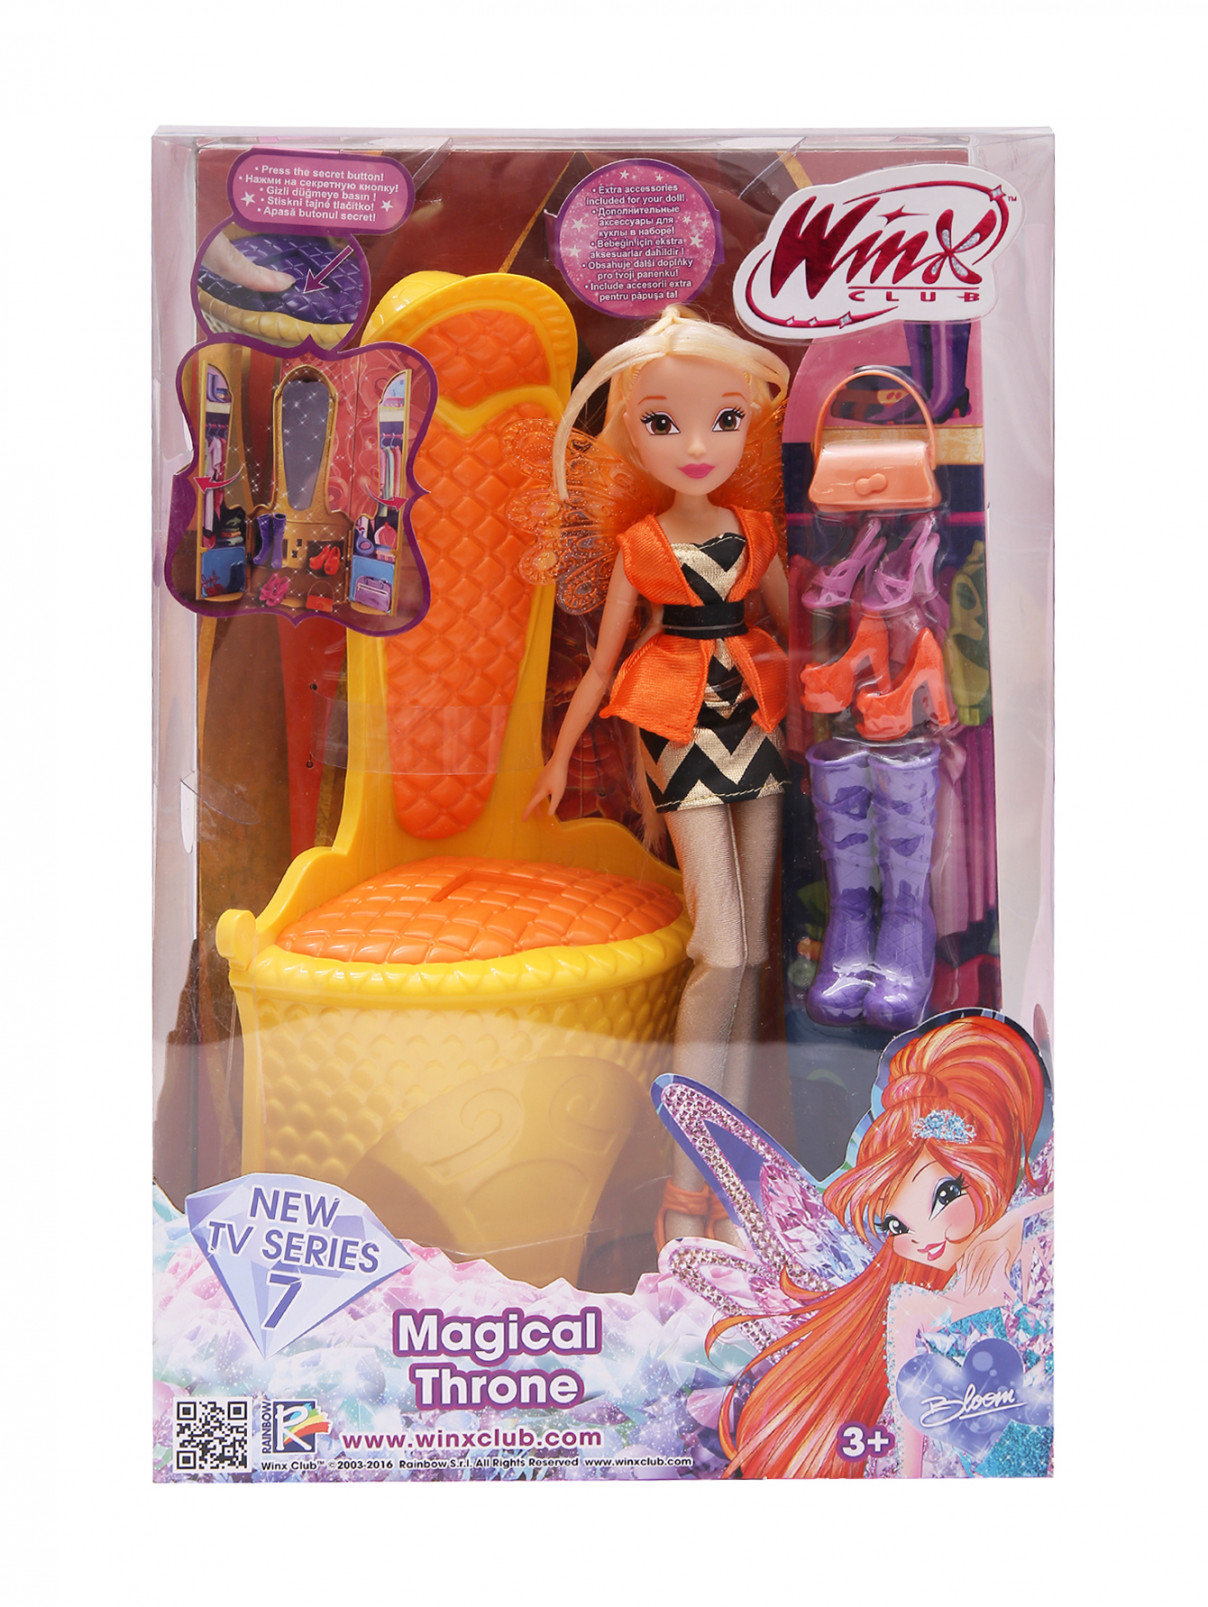 Winx бежевая кукла winx club волшебный трон (541029), купить винтернет-магазине Bosco.ru по цене 6 000 ₽